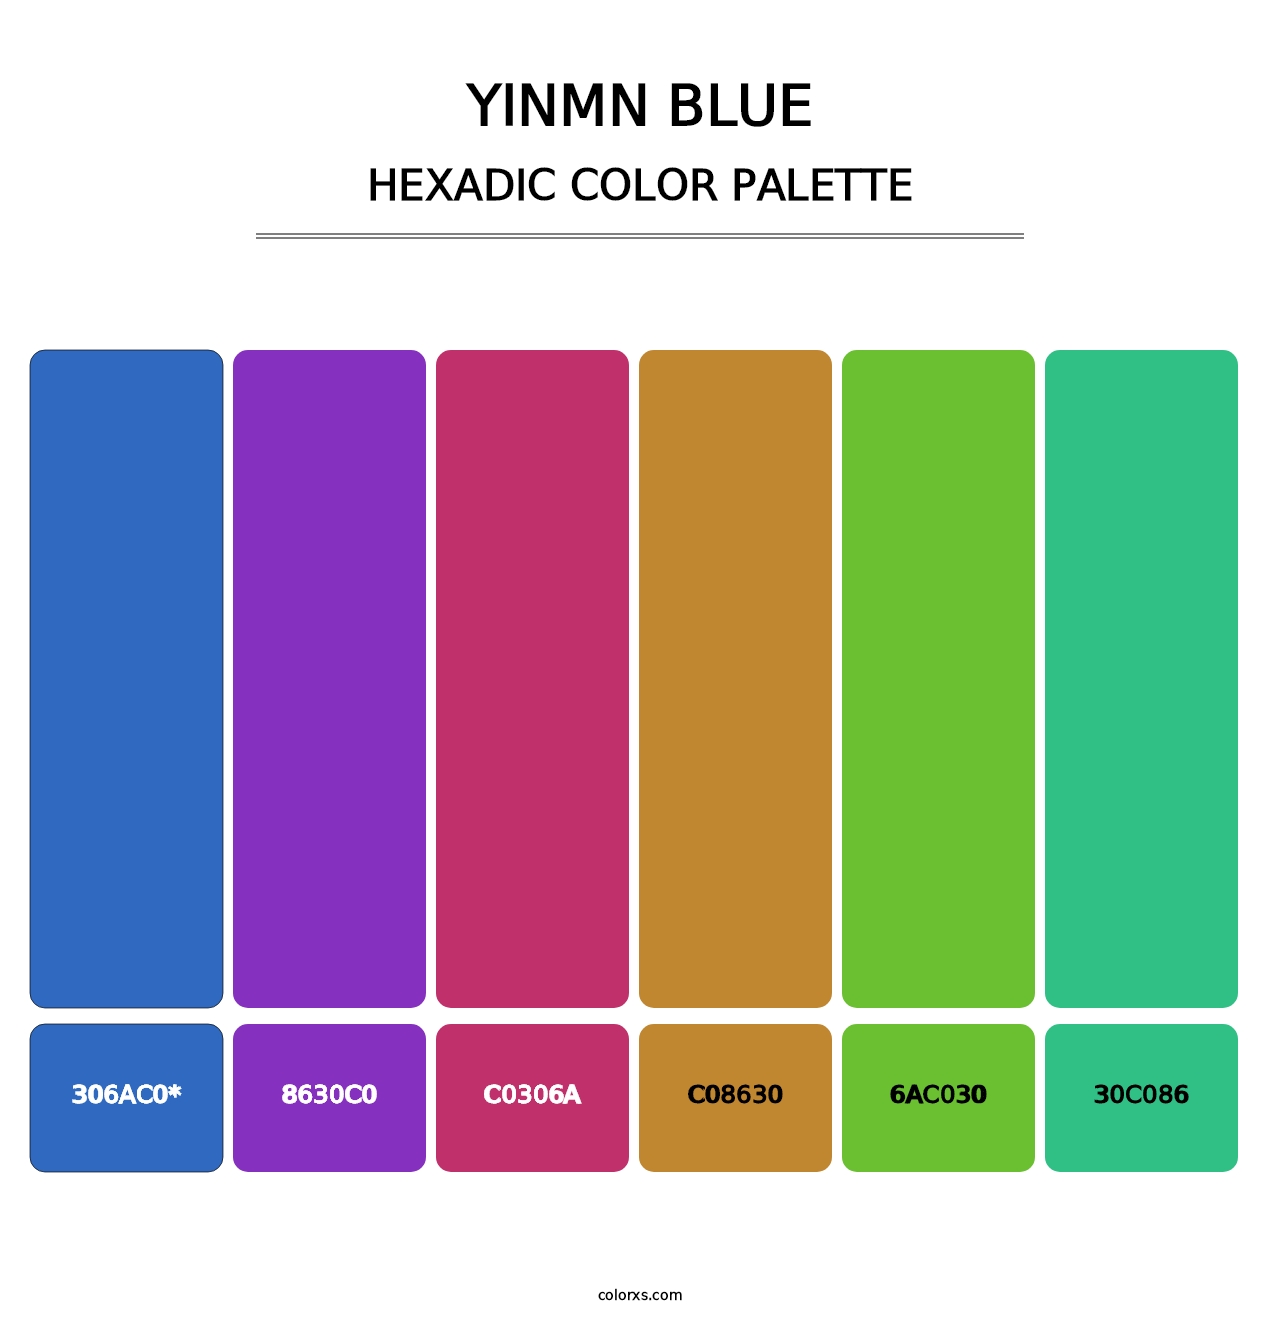 YInMn Blue - Hexadic Color Palette